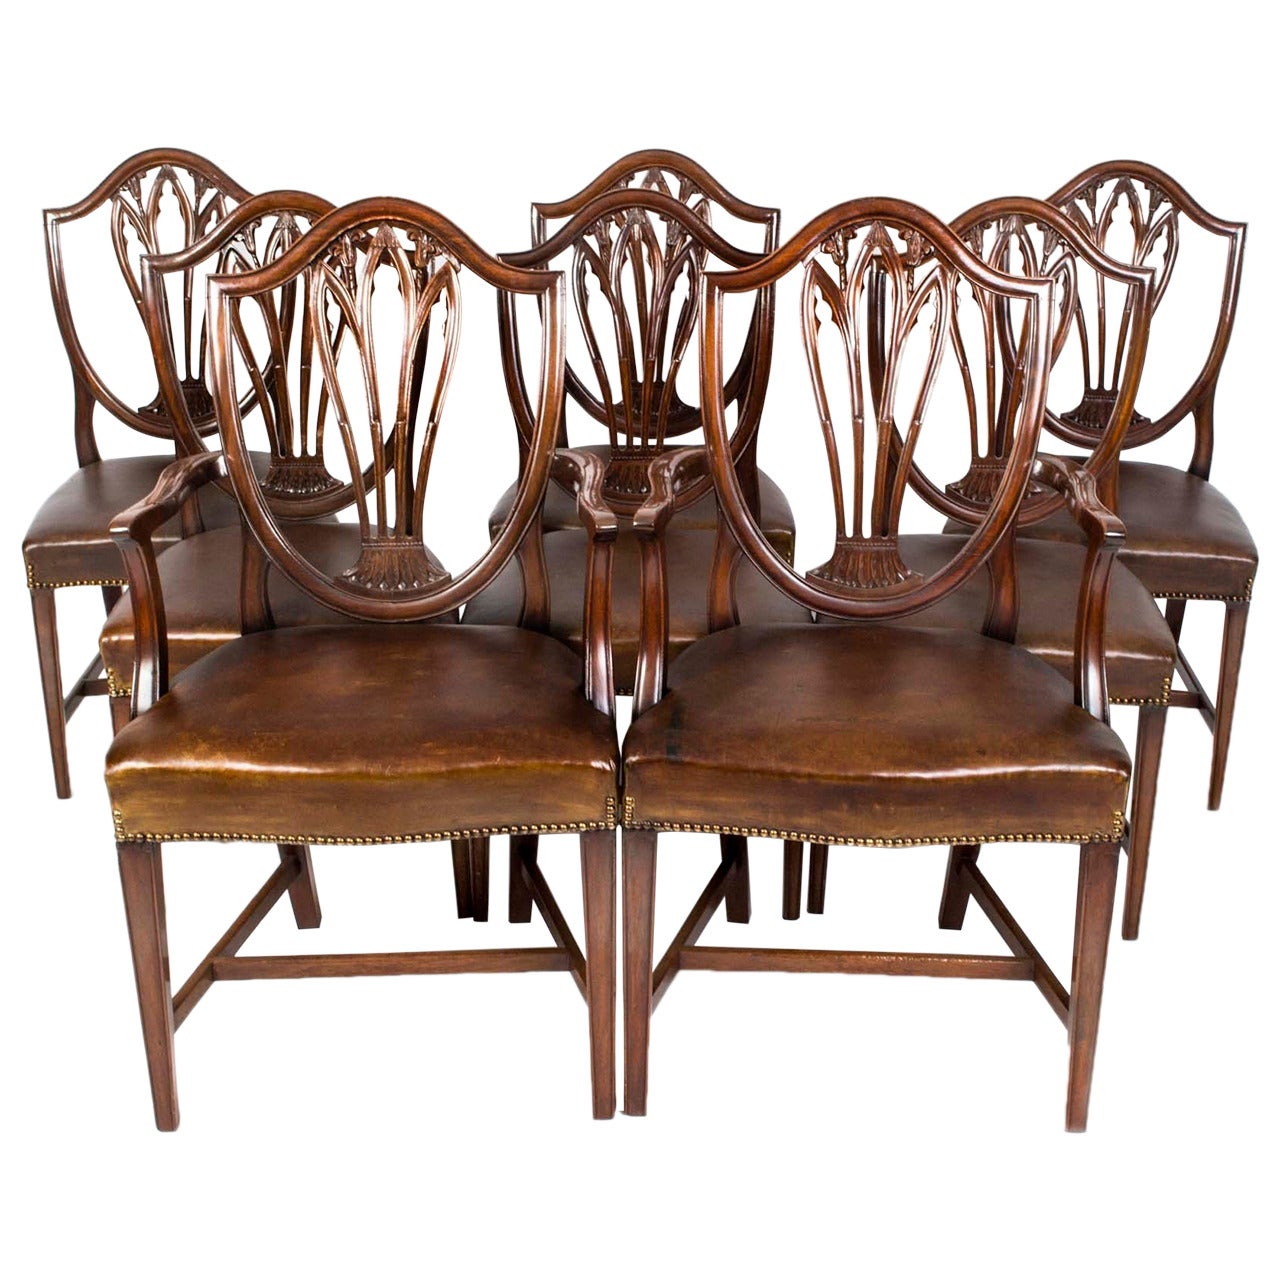 Antique Set 8 English Hepplewhite Dining Chairs c.1900